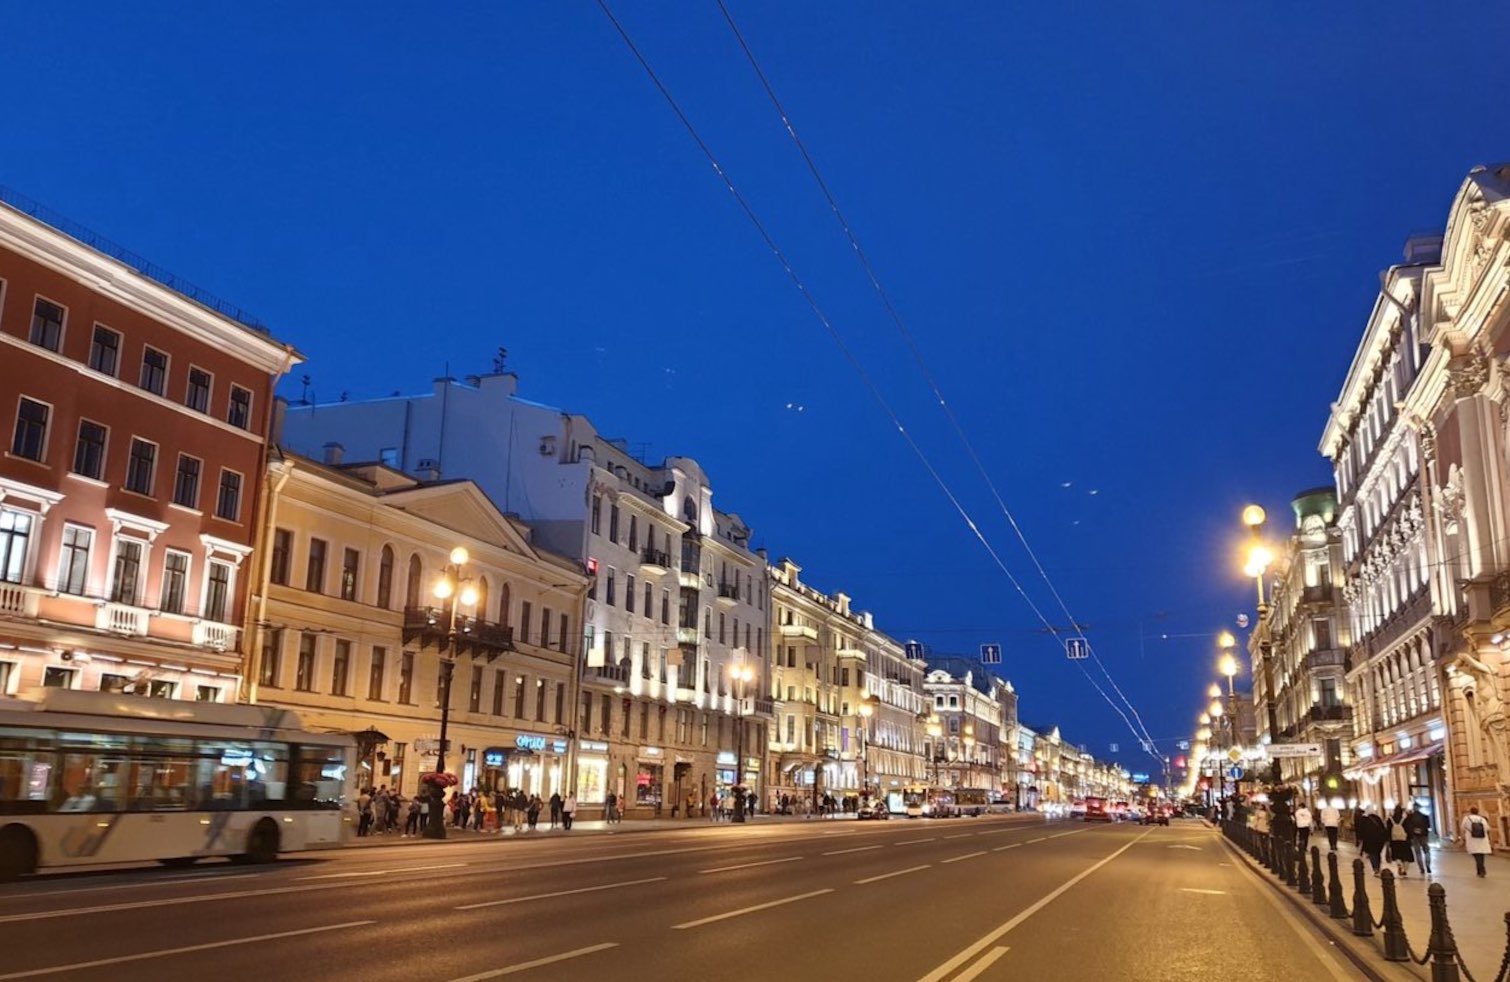 Nevsky Prospect Avenue in St Petersburg